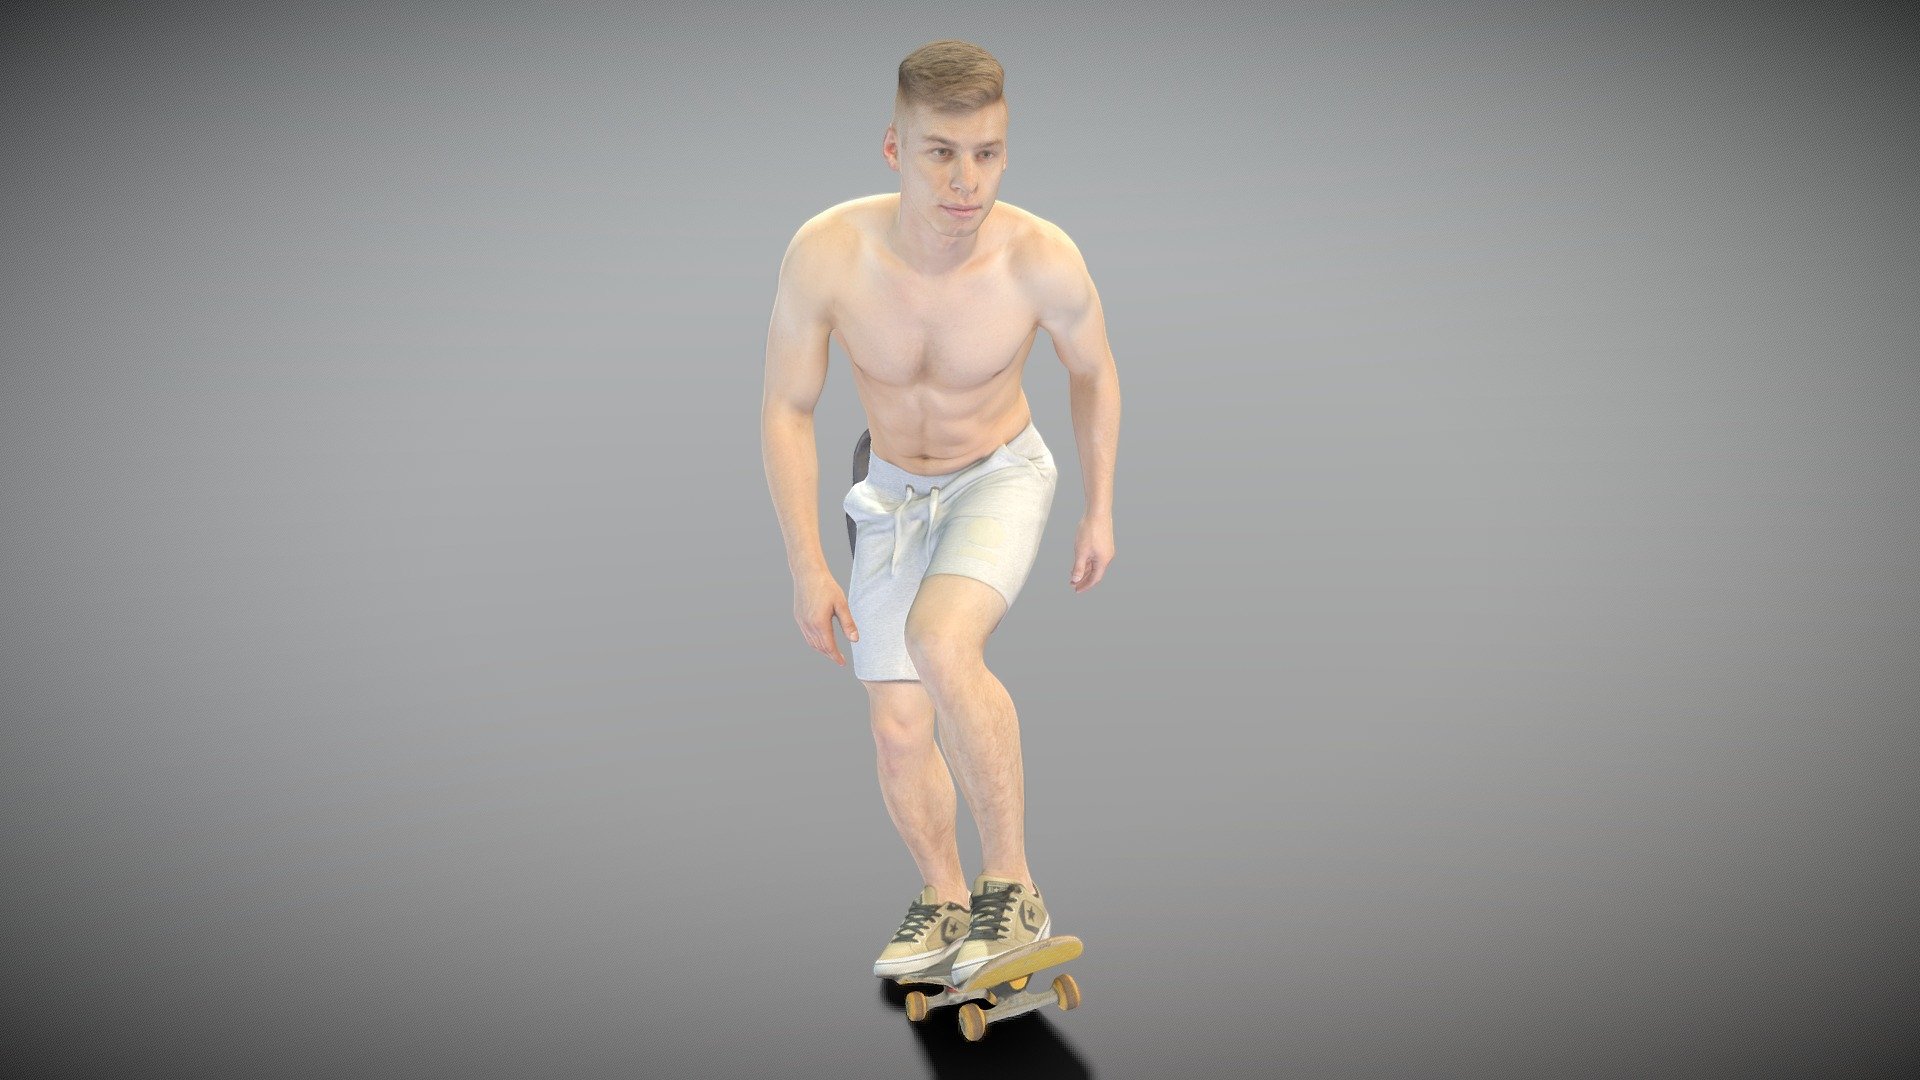 Shirtless man riding on a skateboard 191